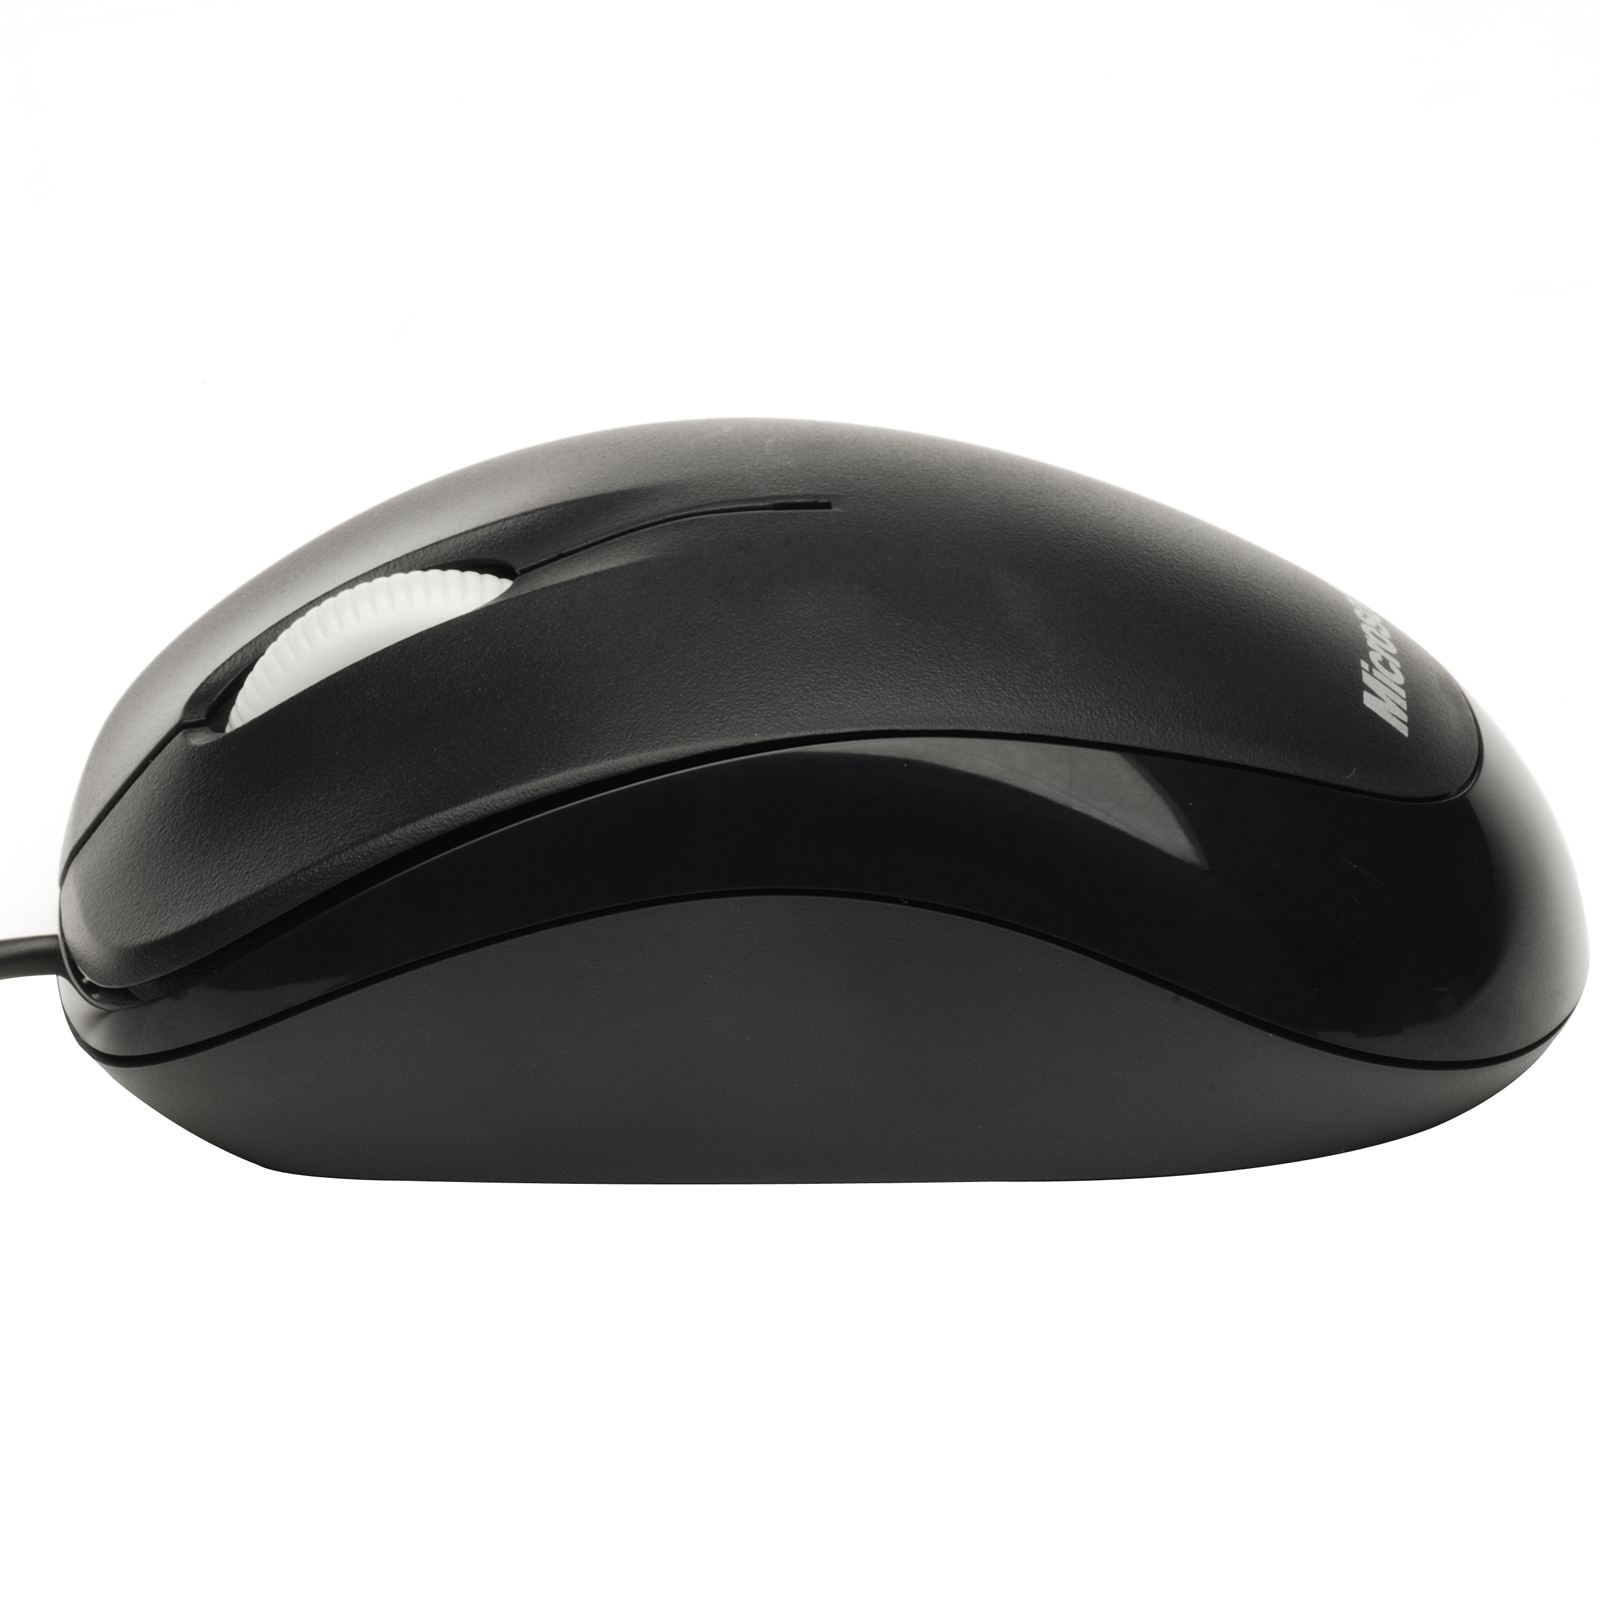 Mouse Microsoft Compact Optical cu fir, negru